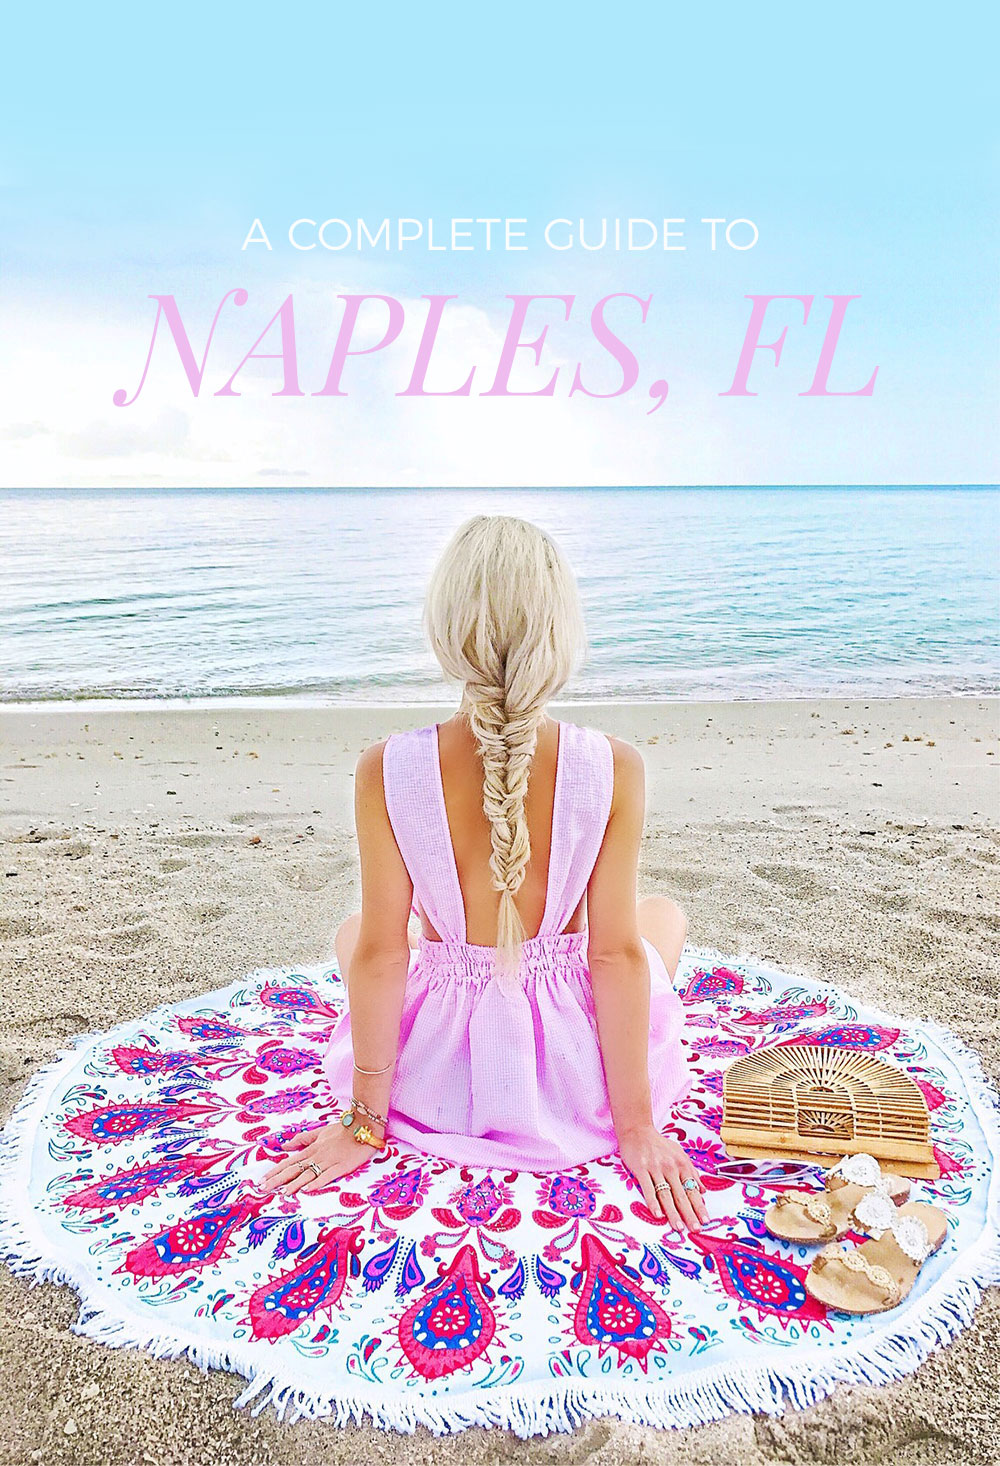 naples florida travel guide